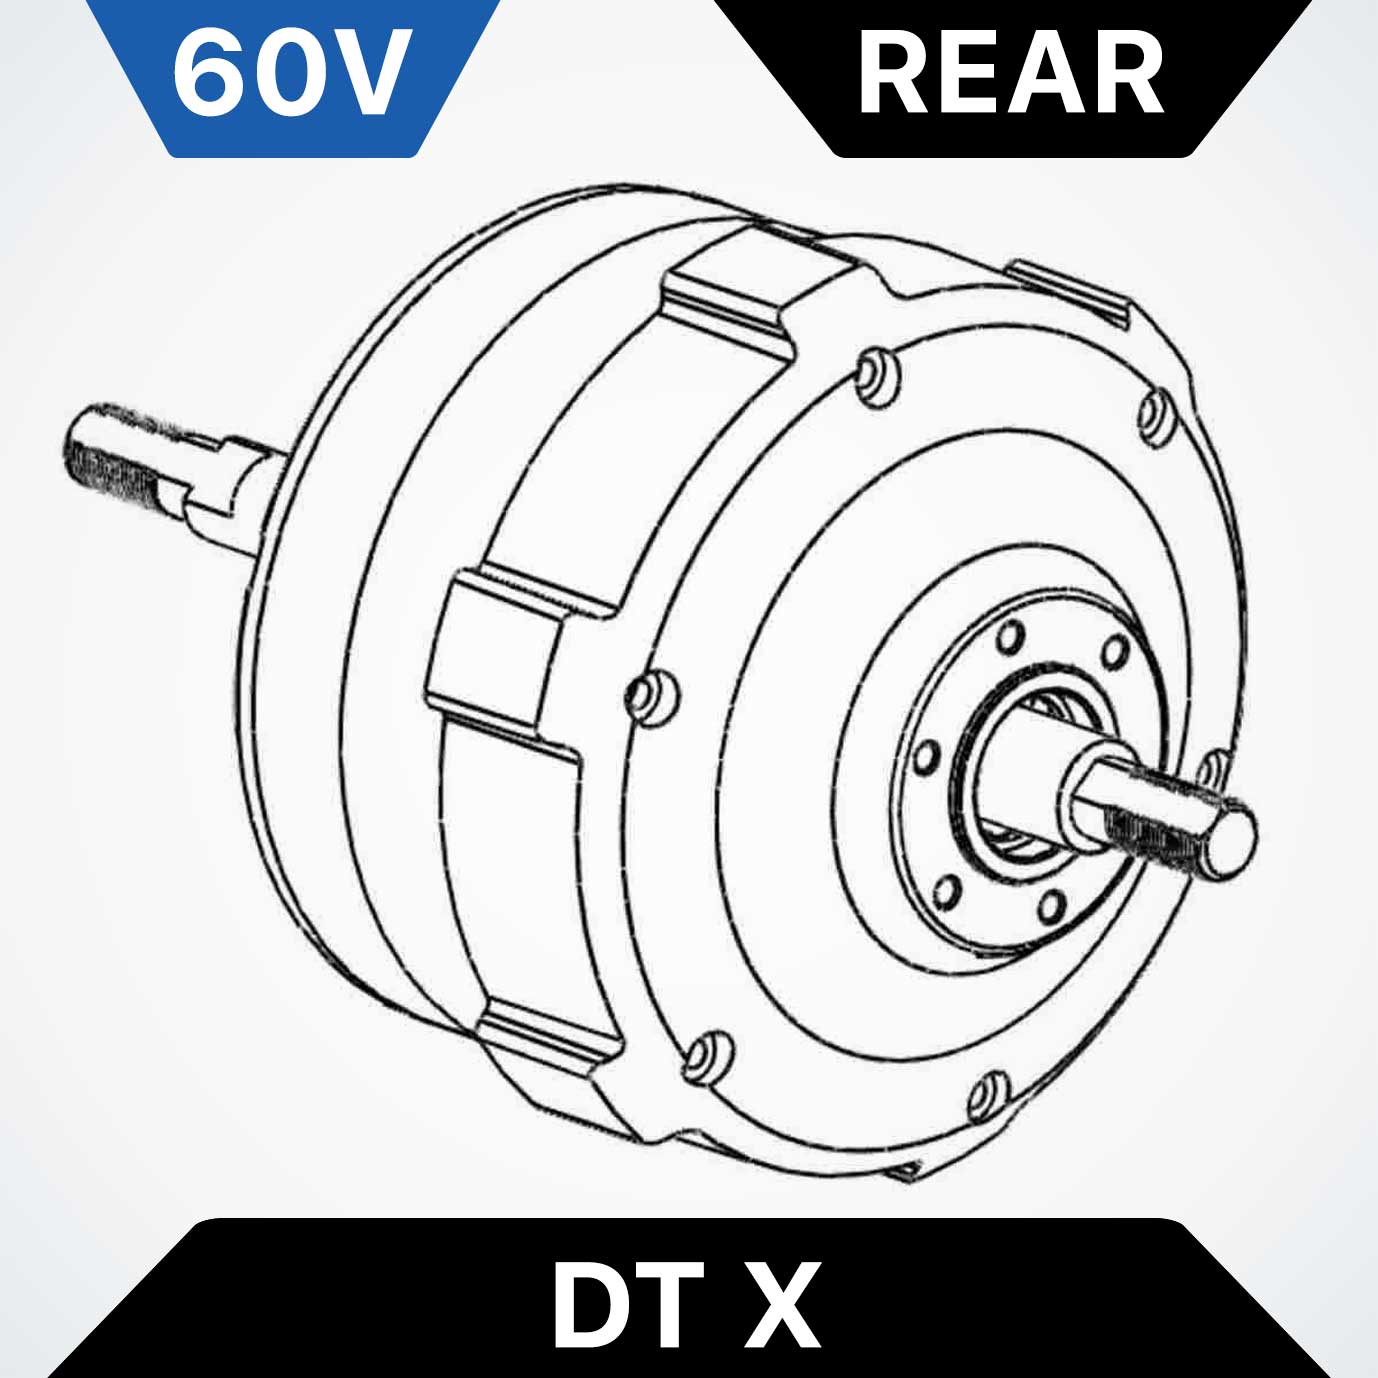 Rear Motor for Dualtron X - 60V